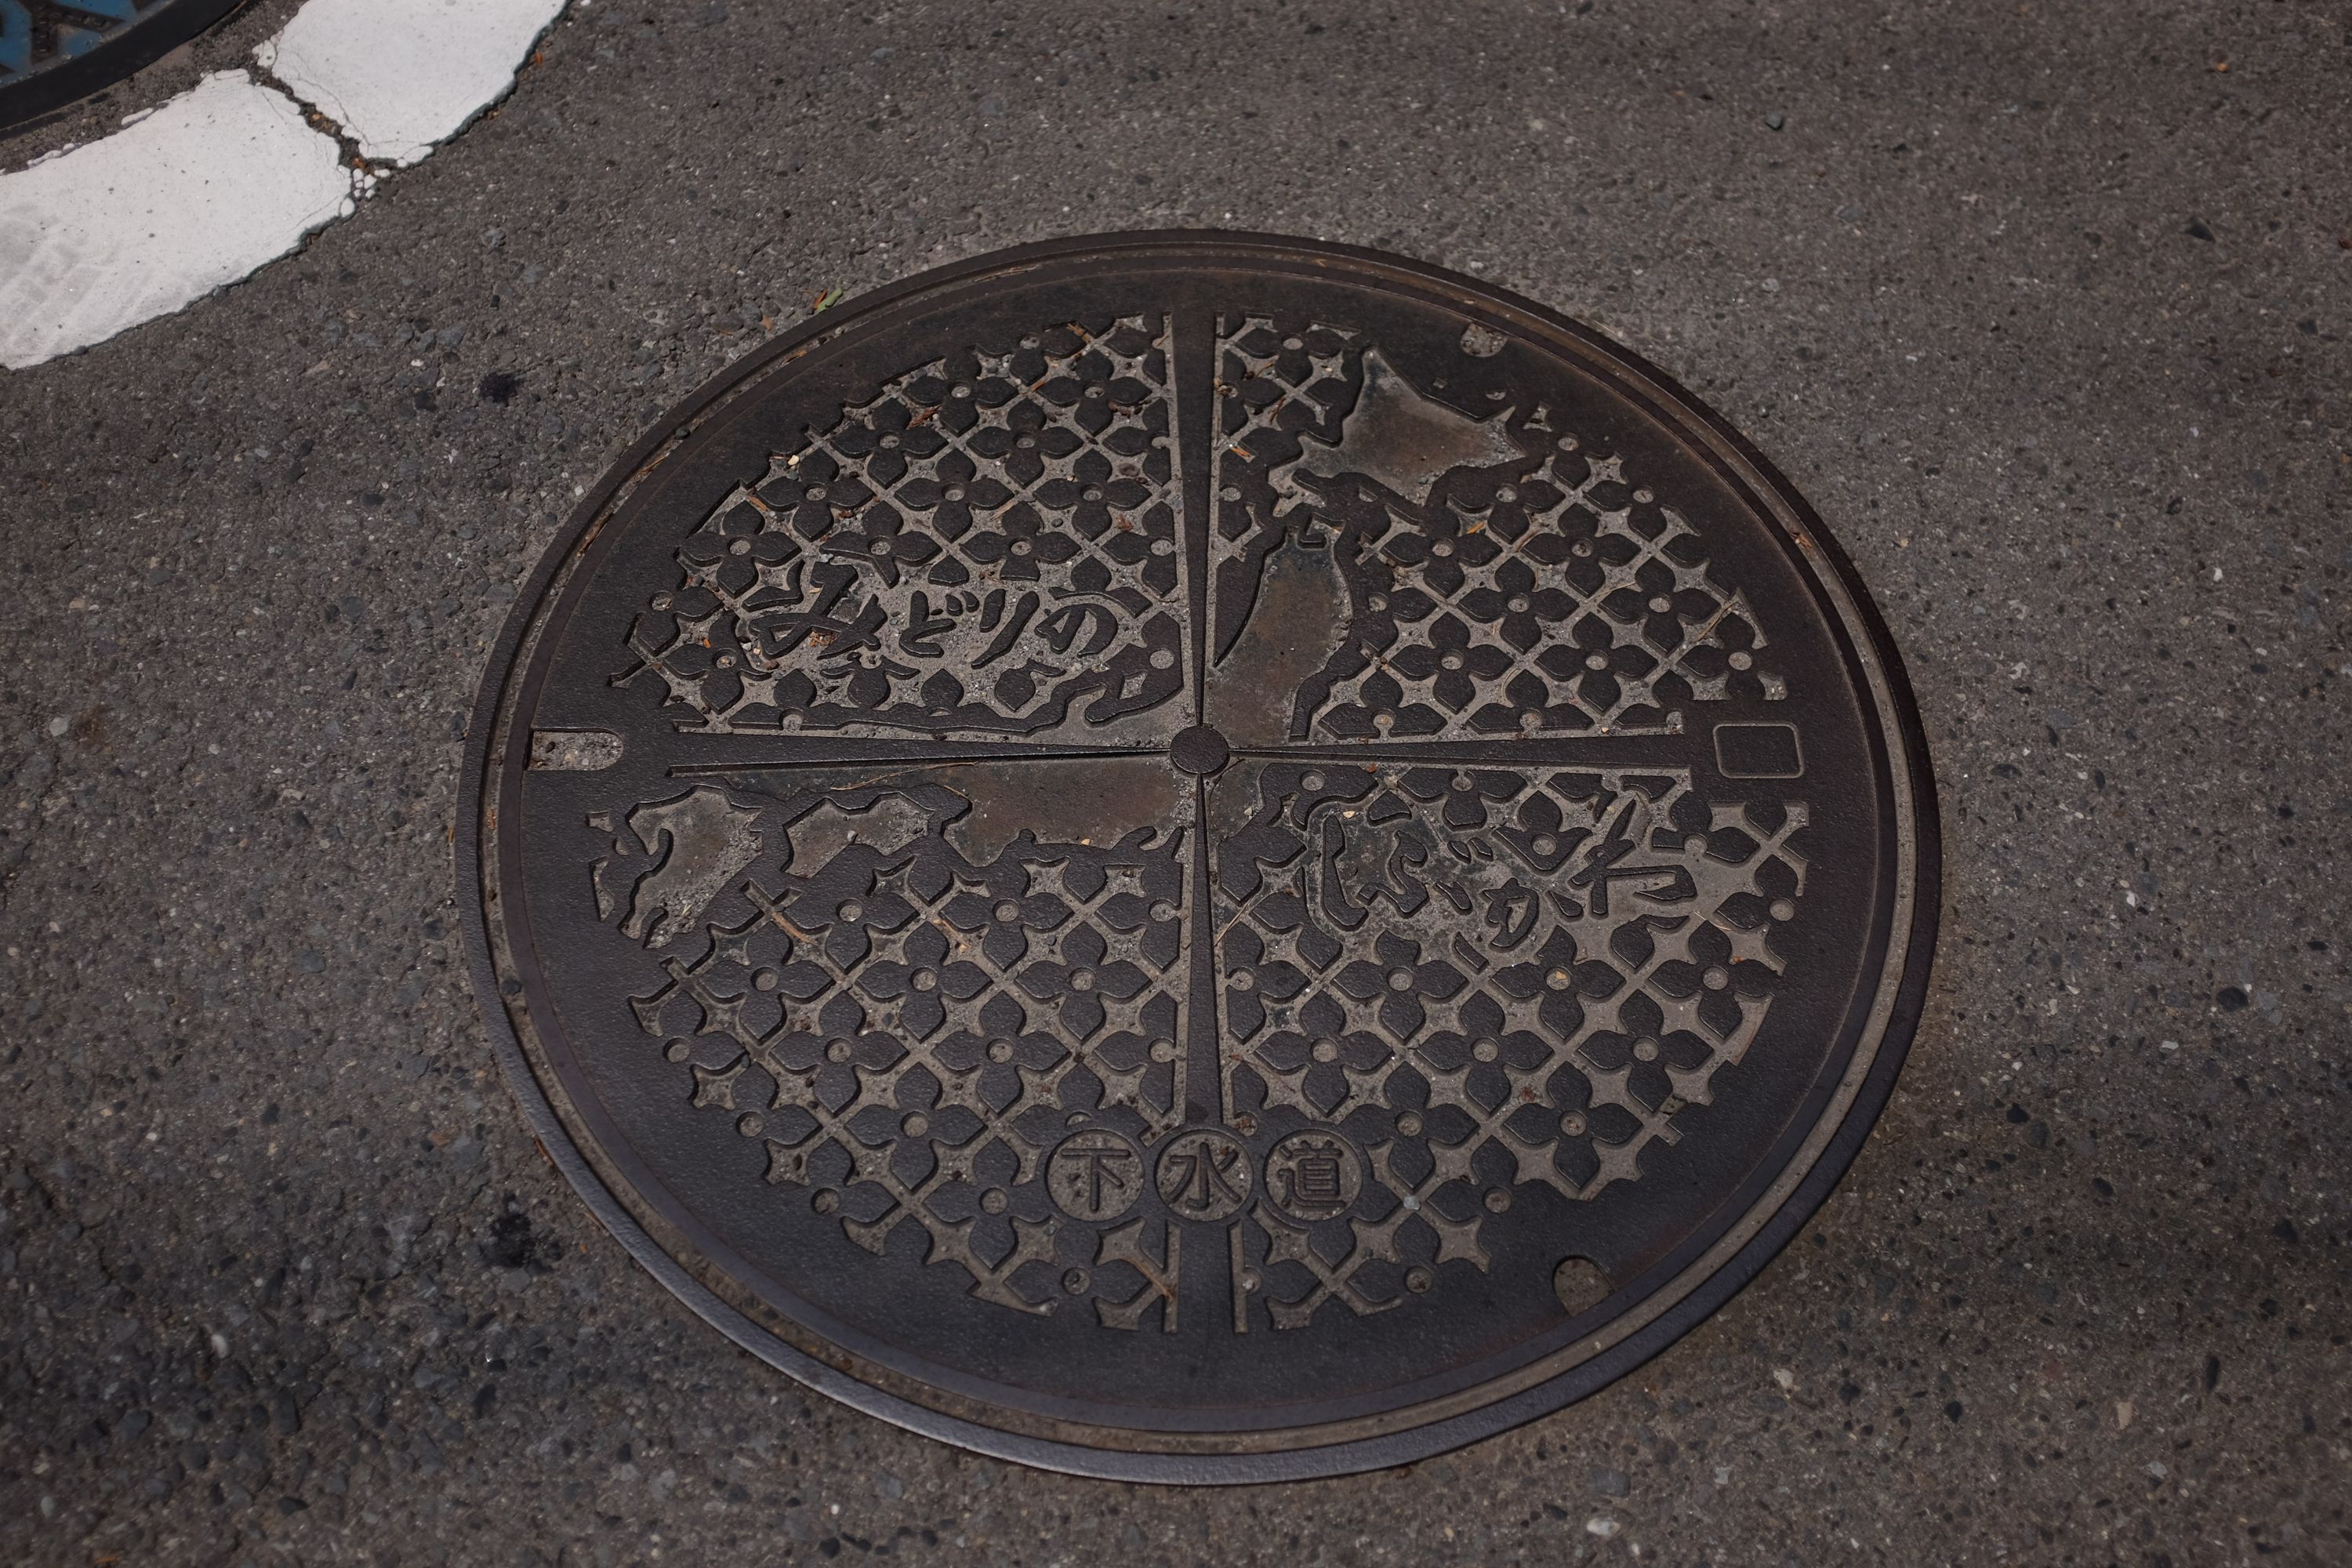 A manhole cover shows the city of Shibukawa as the center of Japan.